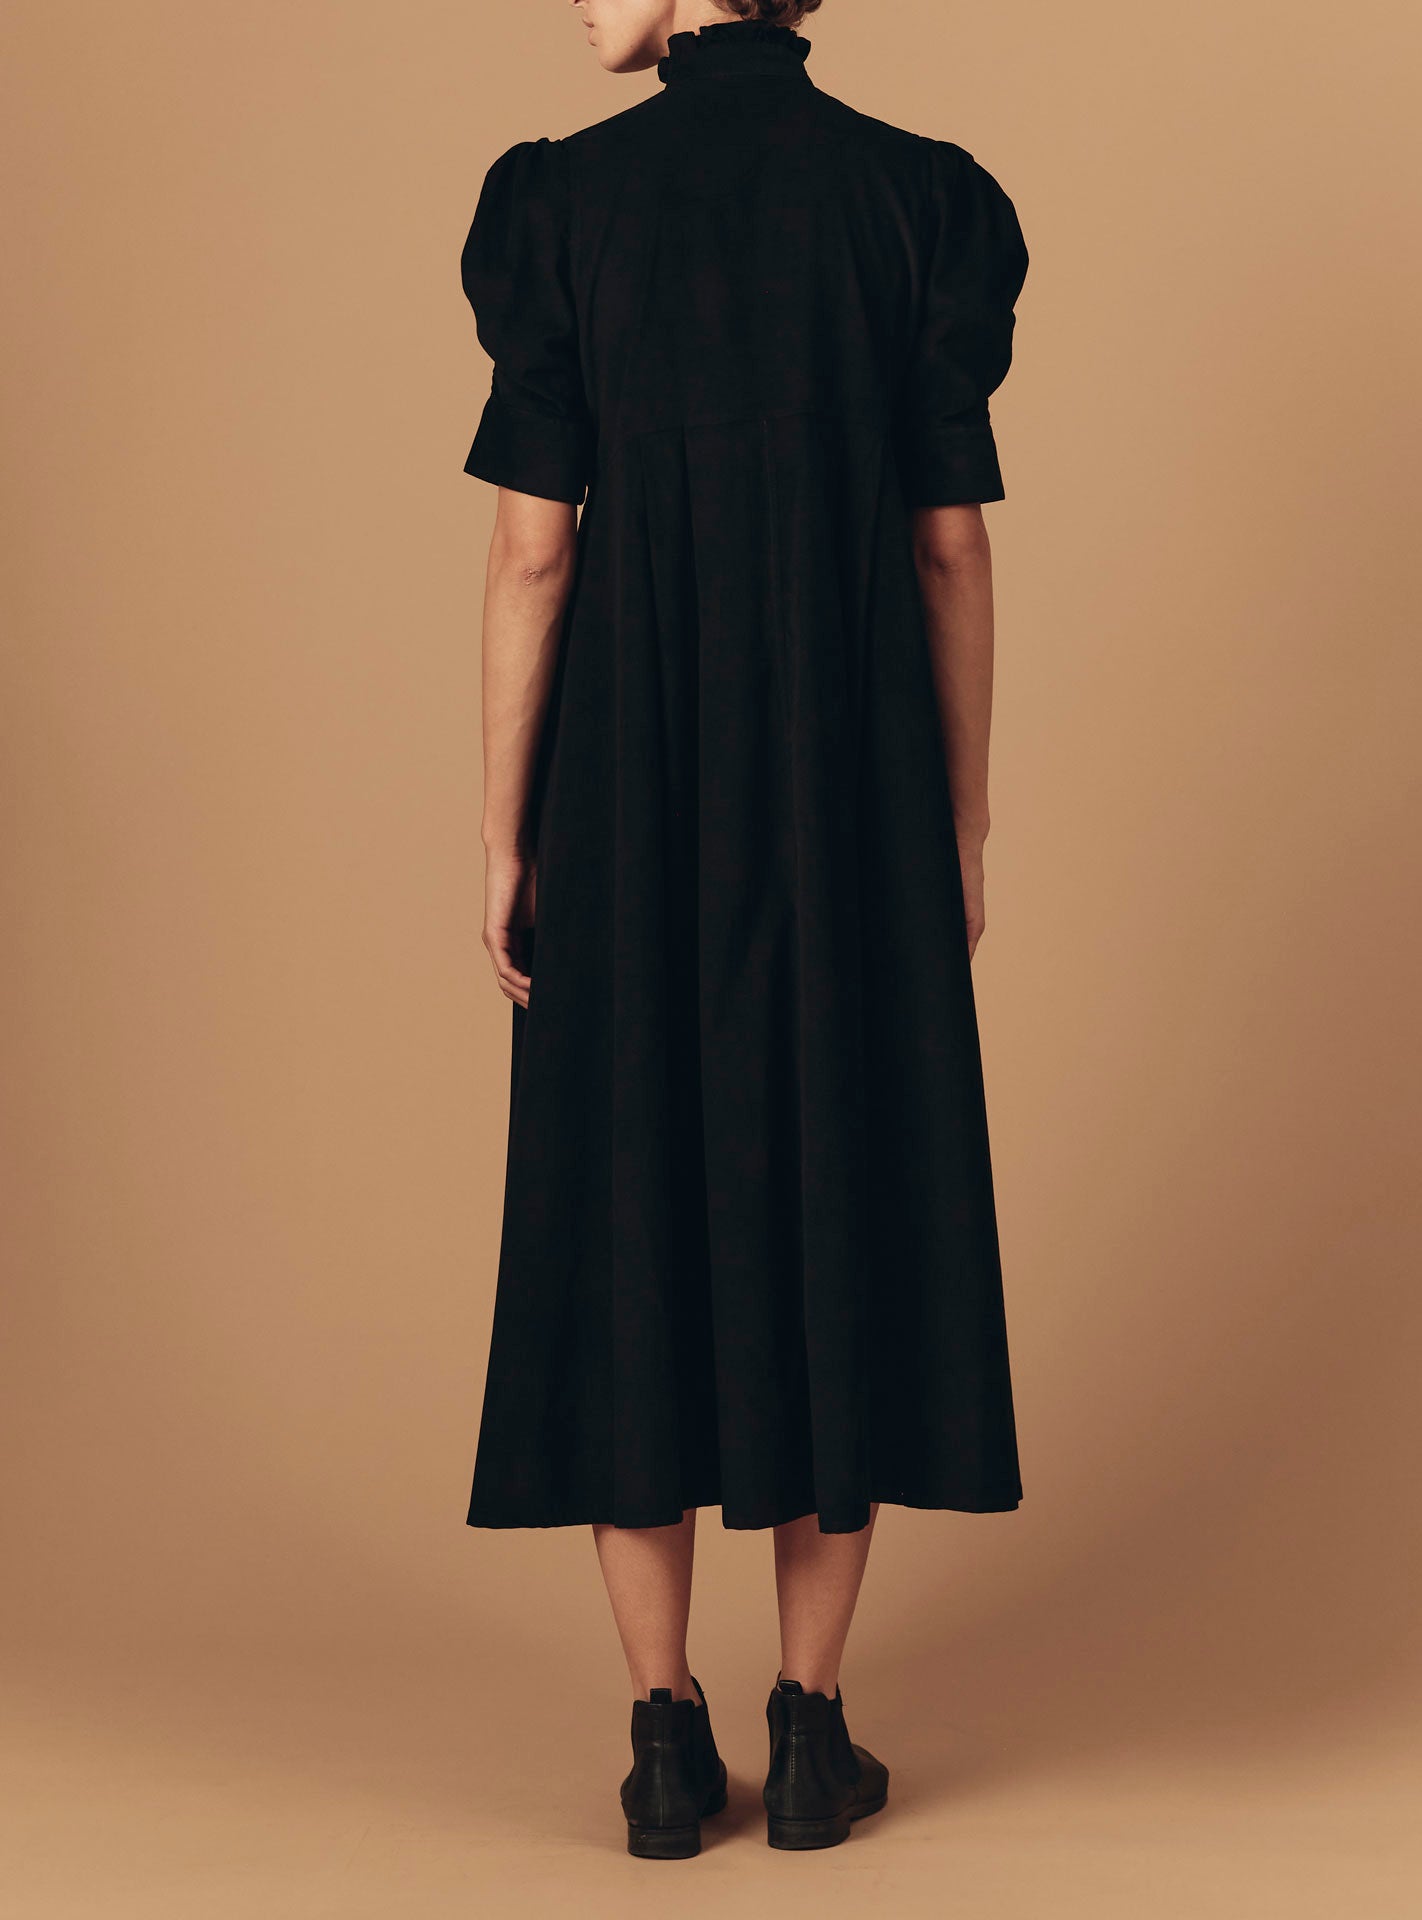 Back view of Venetia Black Plain Corduroy Dress by Thierry Colson